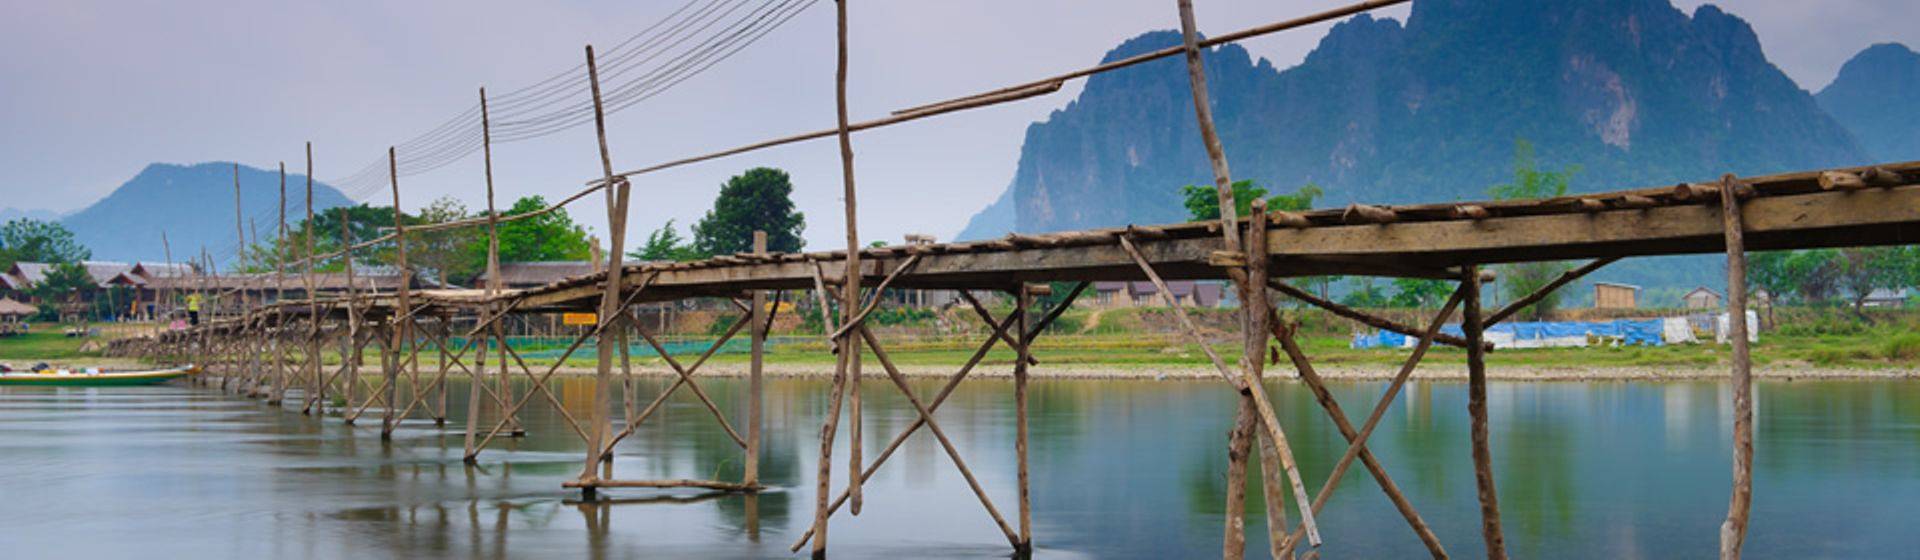 Holidays to Laos Image